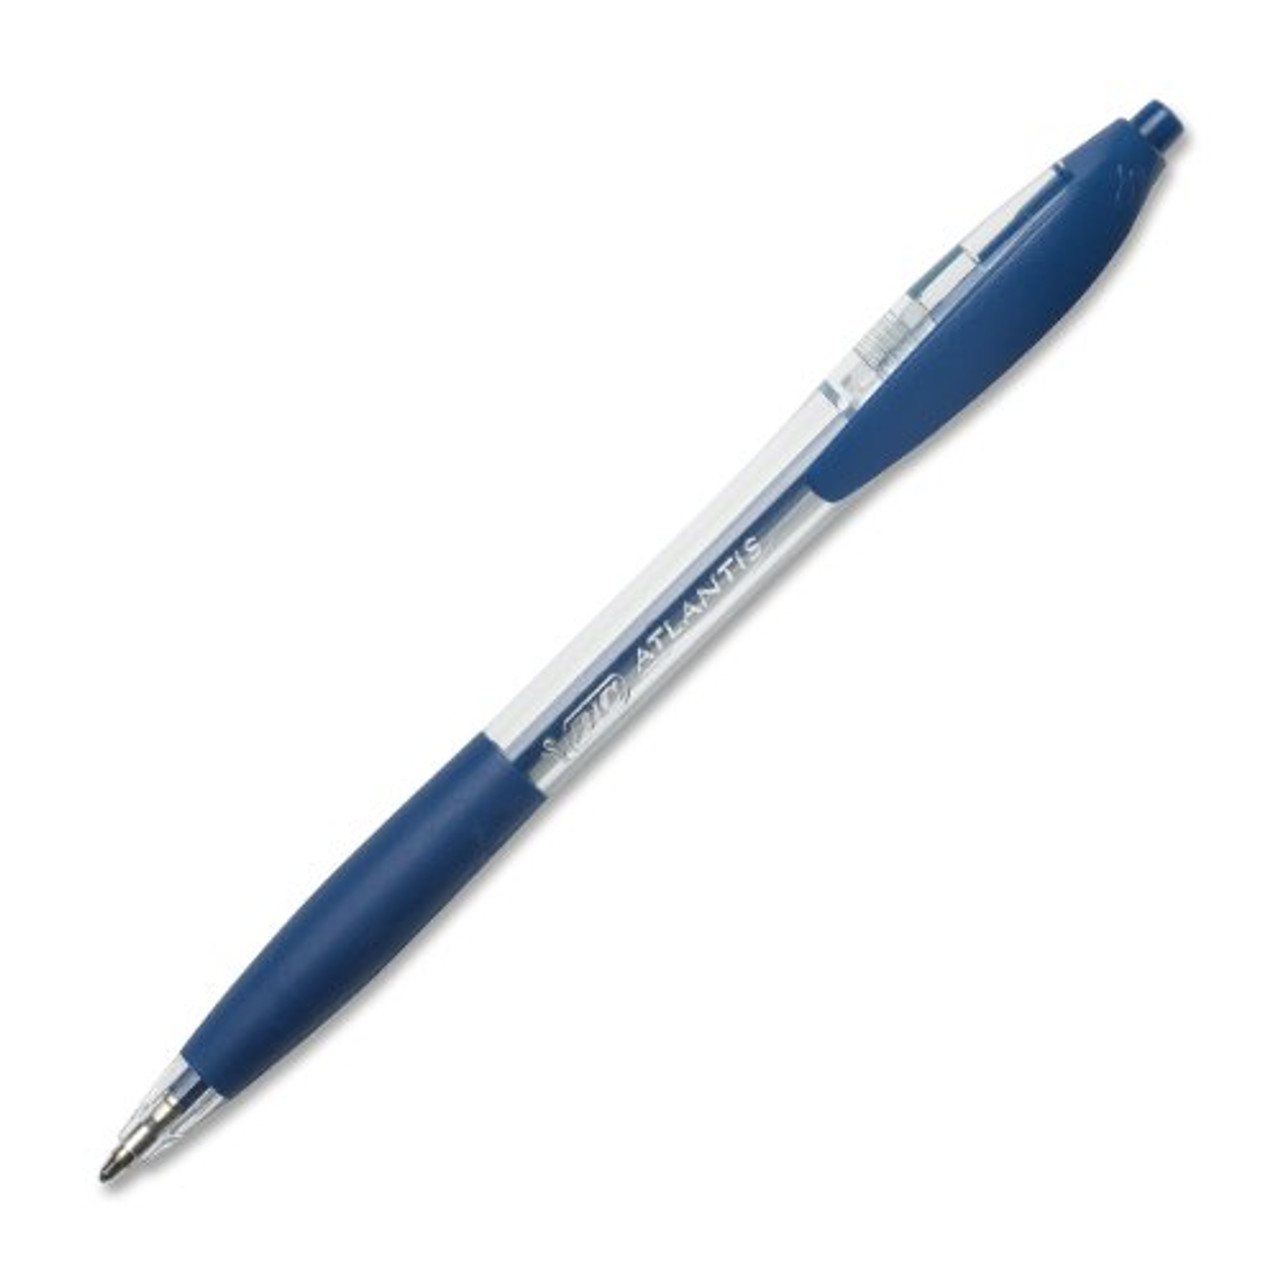 Bic Atlantis Retractable Pen - Medium Pen Point Type 